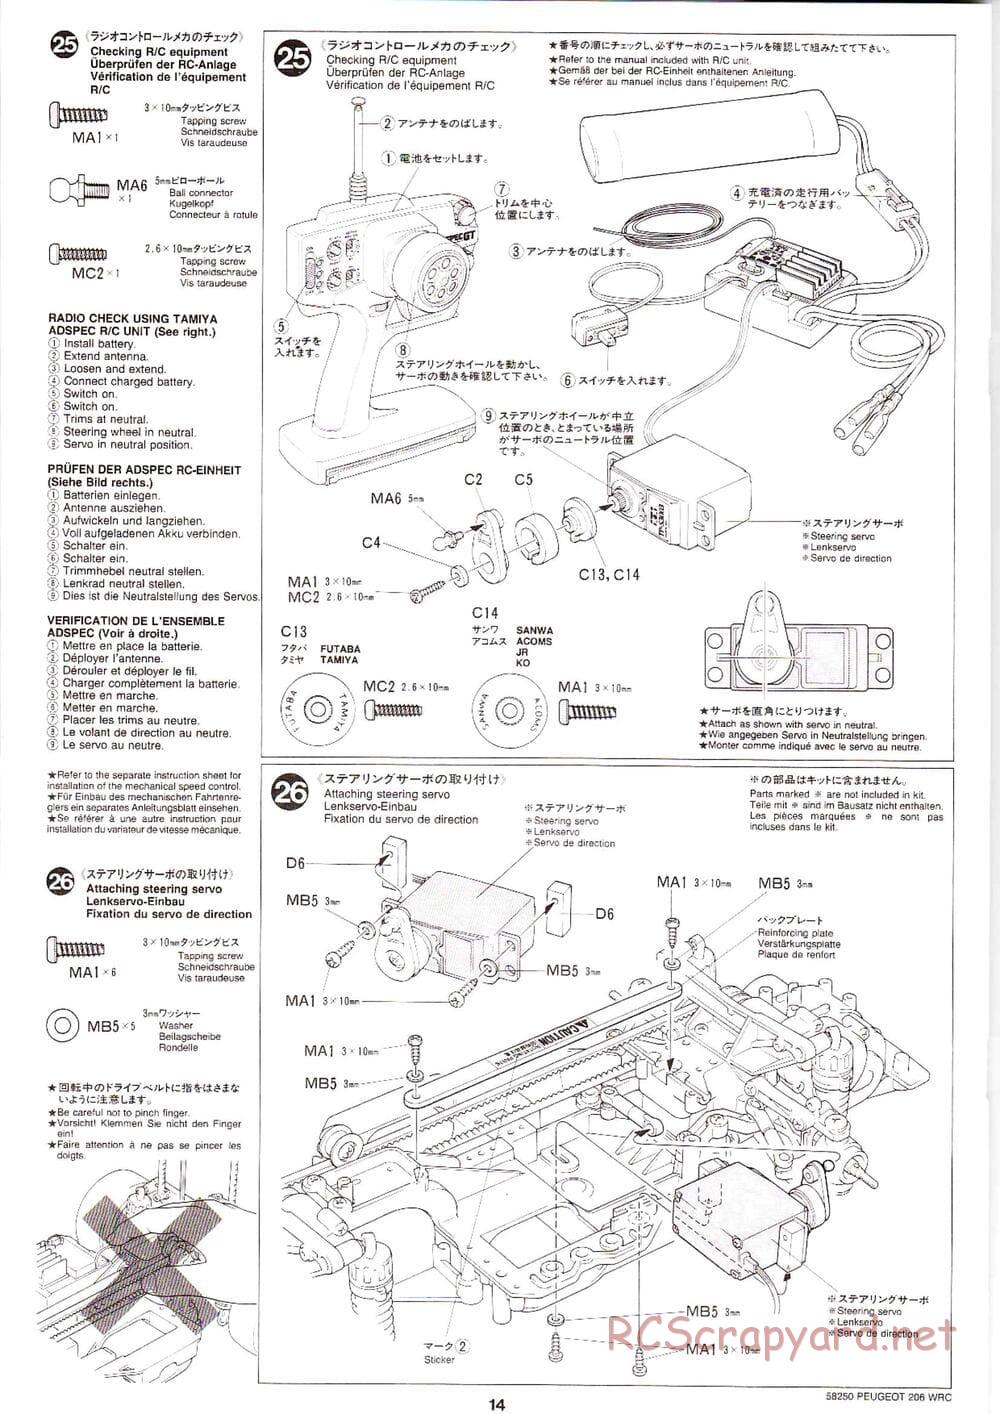 Tamiya - Peugeot 206 WRC - TA-03FS Chassis - Manual - Page 14